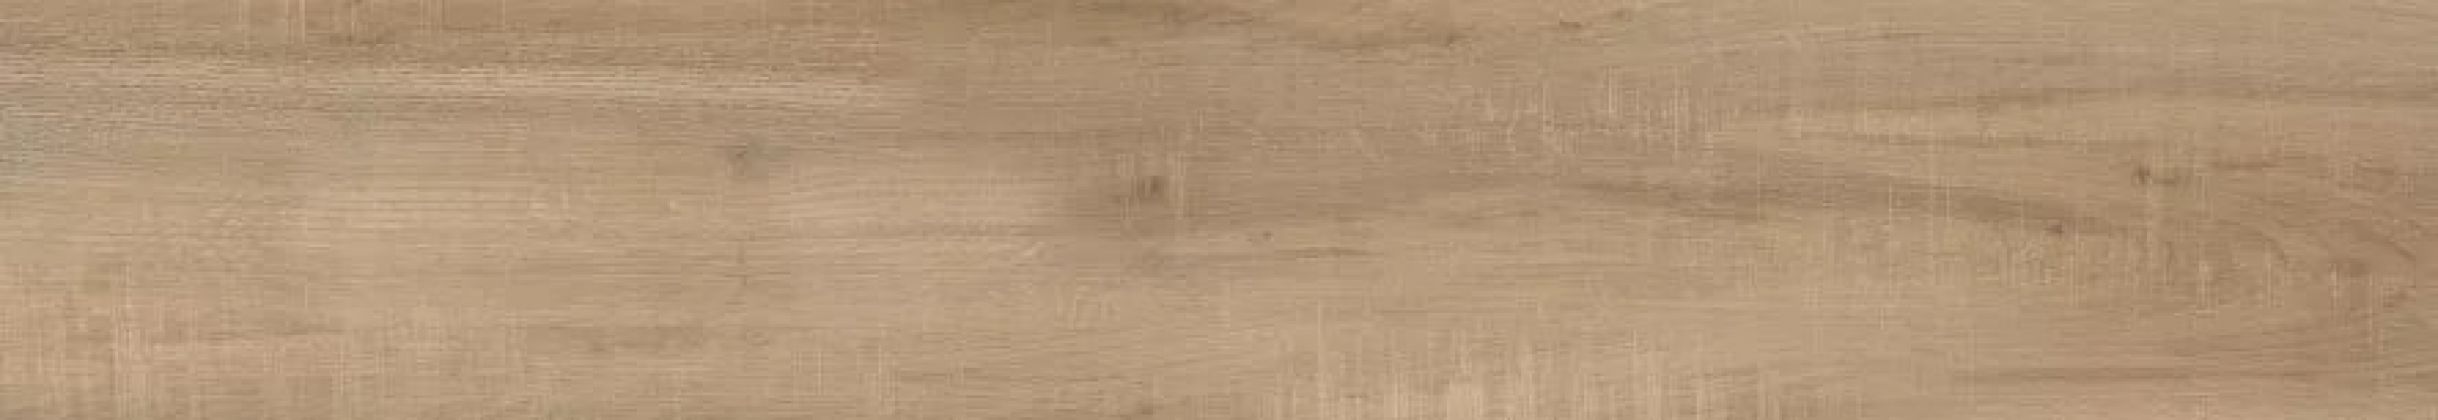 Neodom Wood collection Columbia Marron 20x120 172-1-2